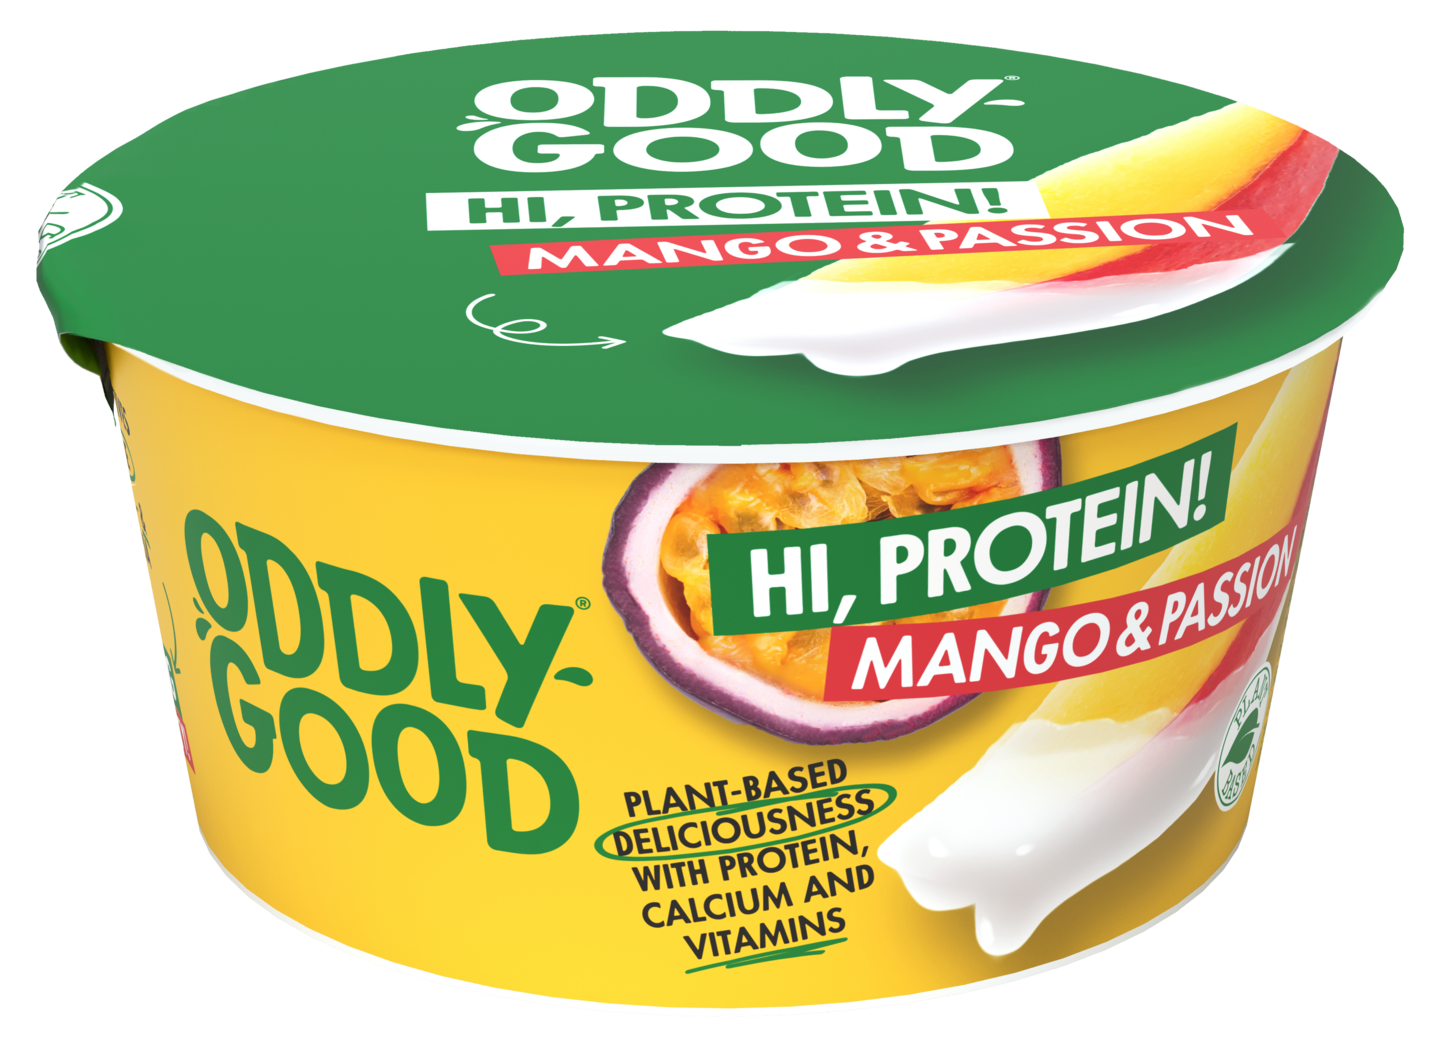 Oddlygood proteiinigurtti 150g mango-passion